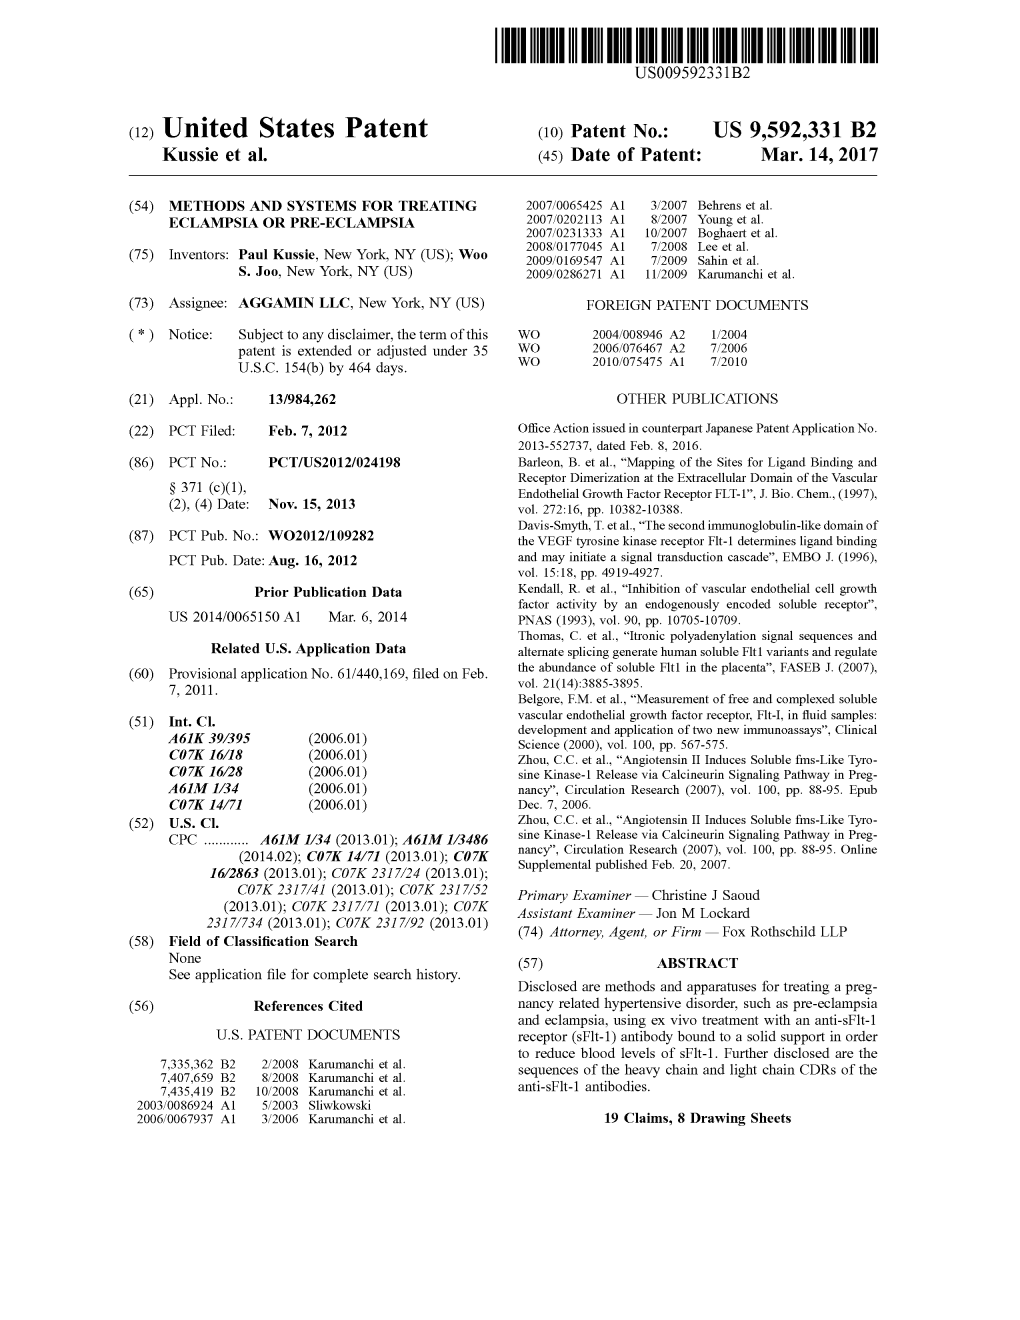 (12) United States Patent (10) Patent No.: US 9,592,331 B2 Kussie Et Al